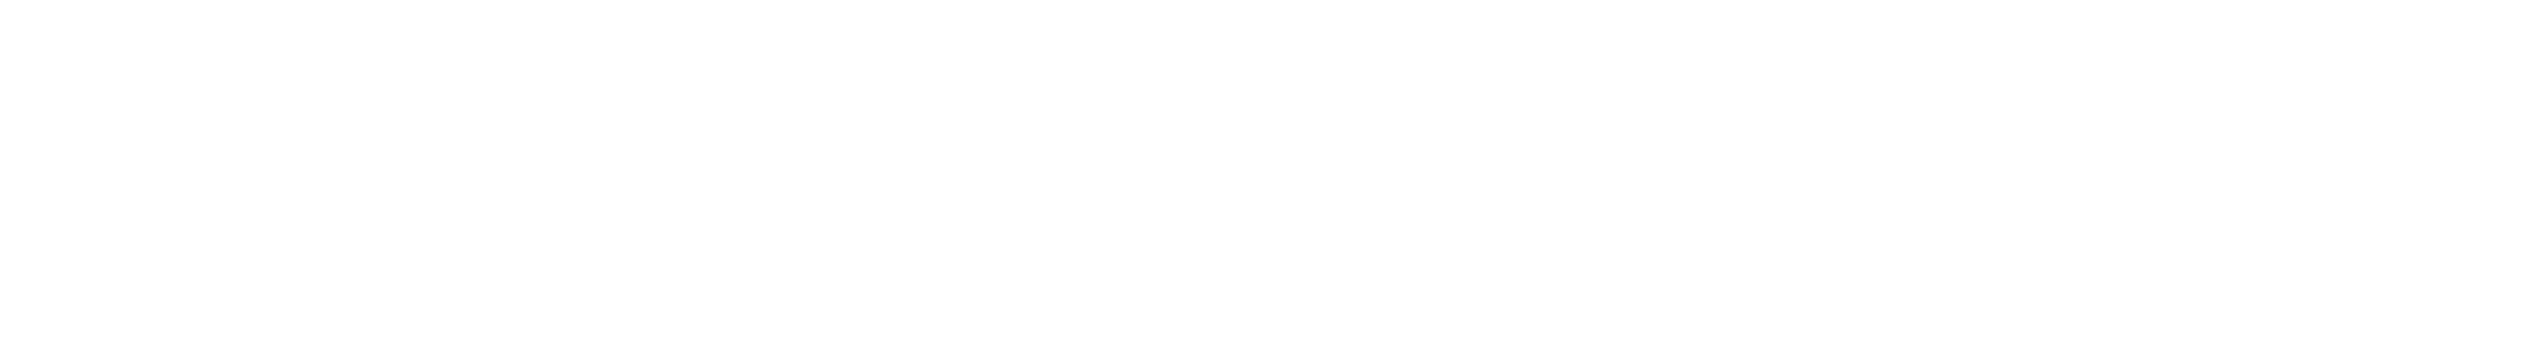 AW_logo-Horiz_White.png